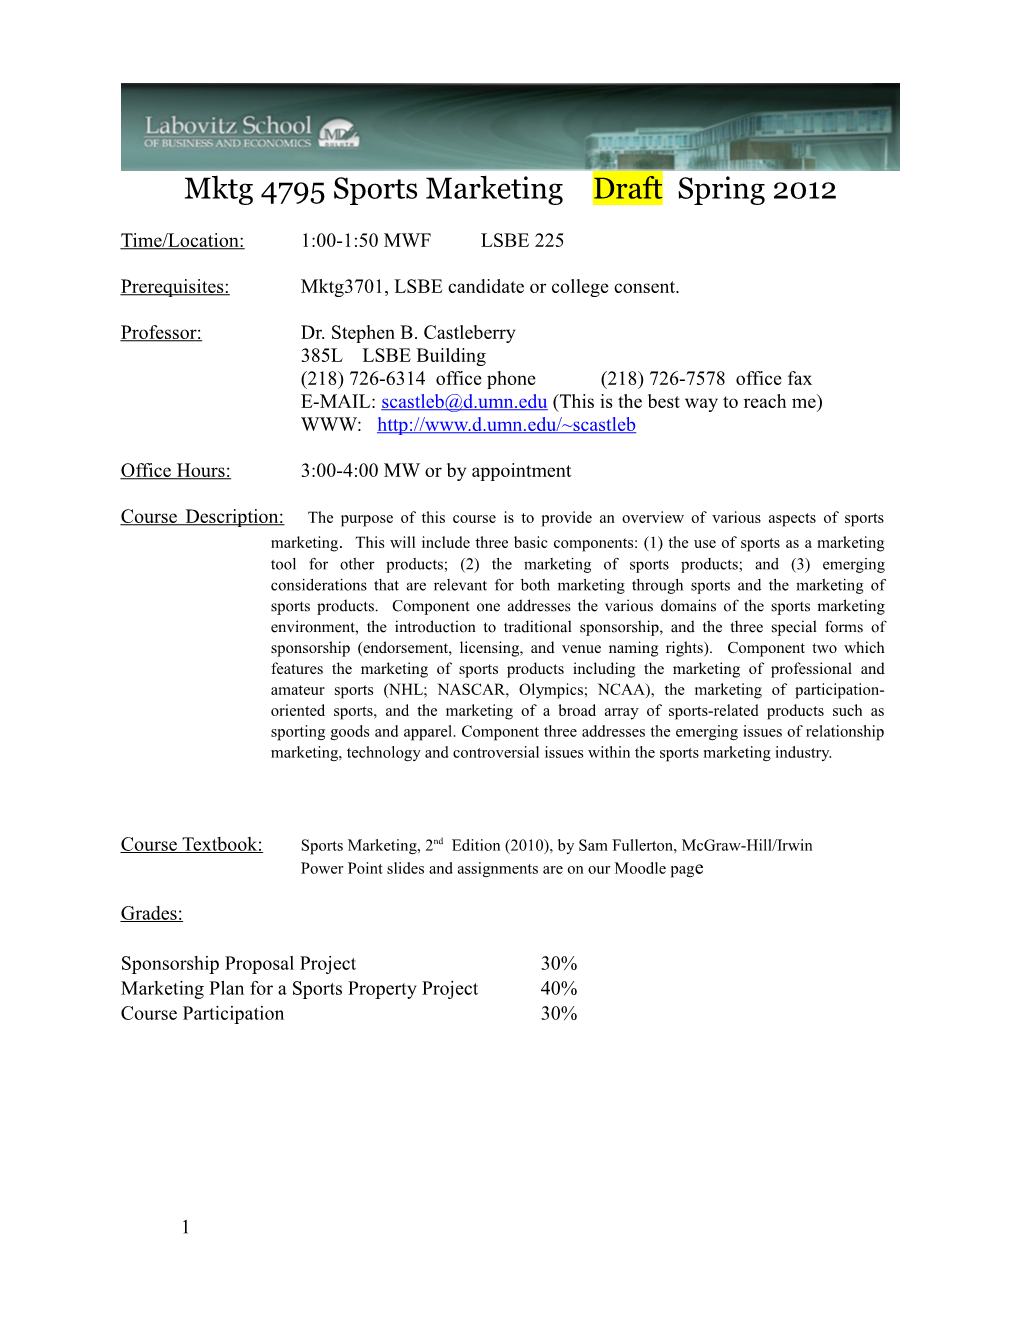 Mktg 4795 Sports Marketing Draft Spring 2012